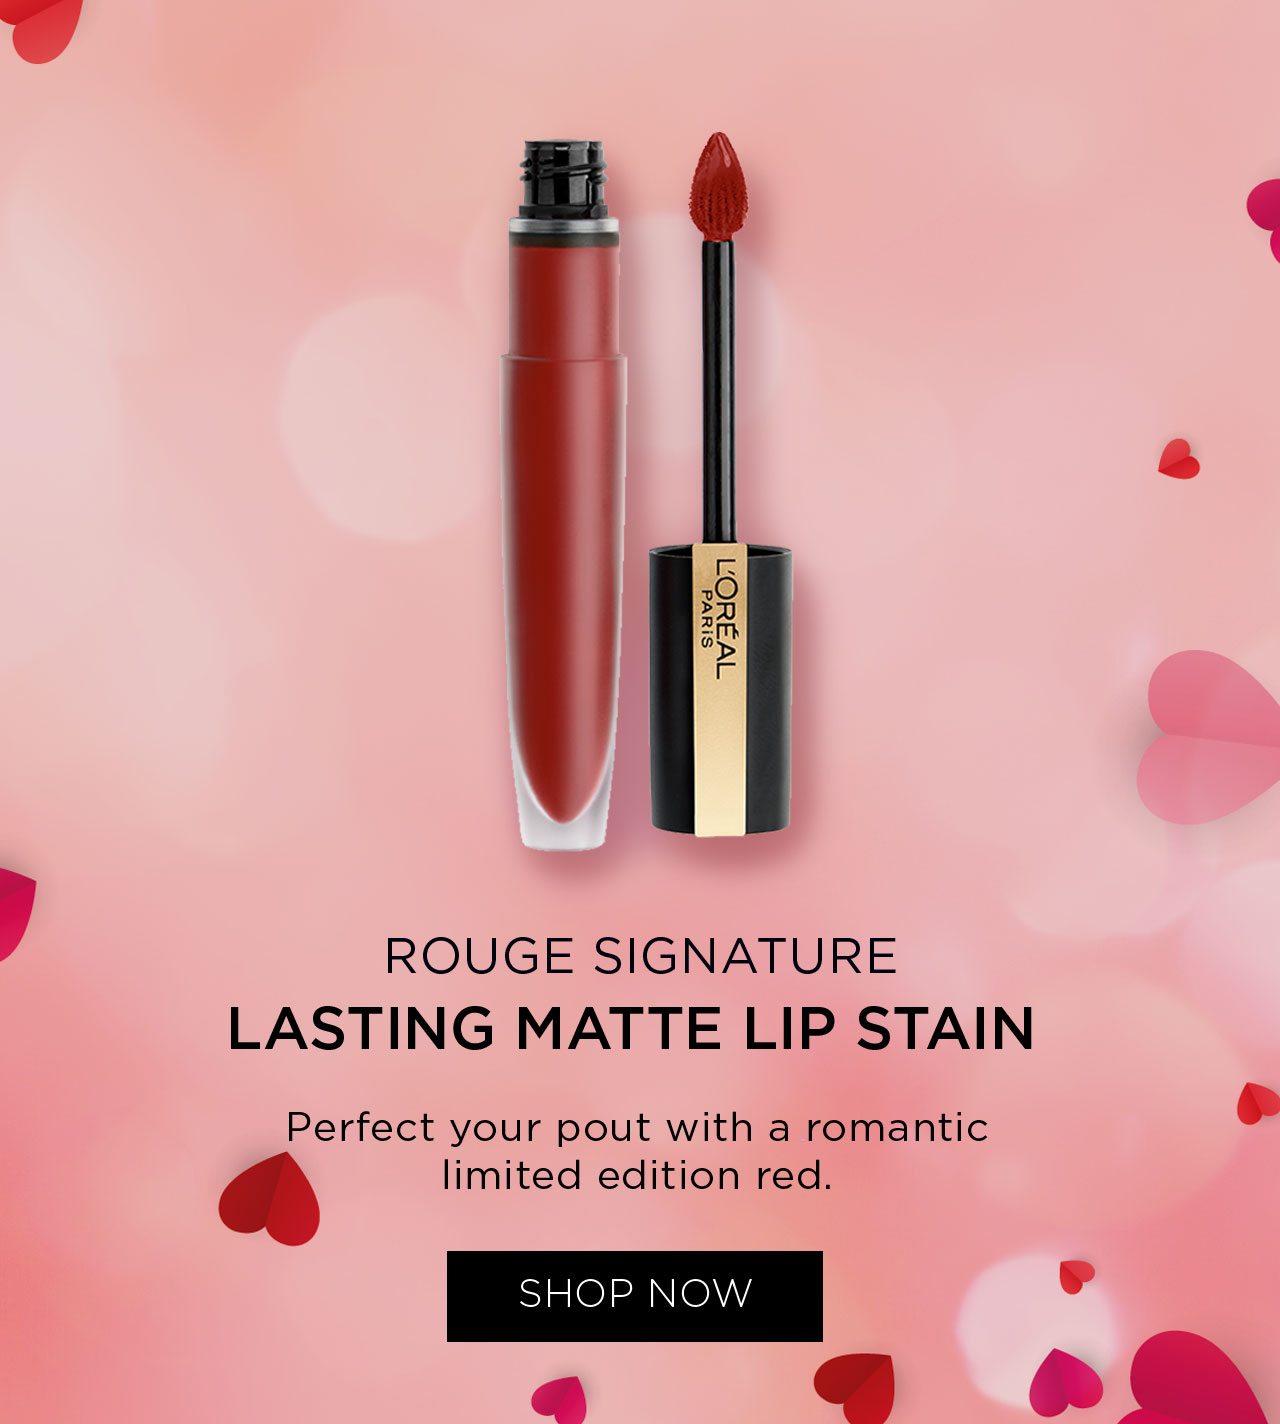 Rouge Signature - Lasting Matte Lip Stain - Shop Now